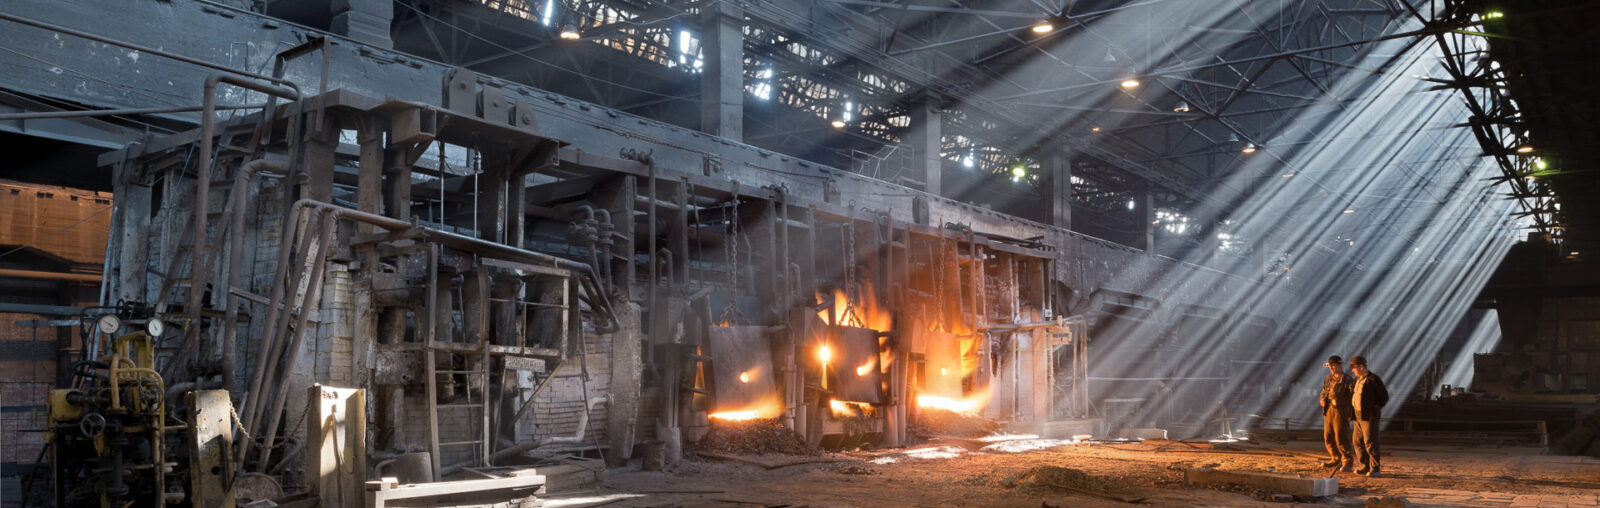 TATA Steel IJmuiden, heating furnace  Viktor Mácha - industrial photography